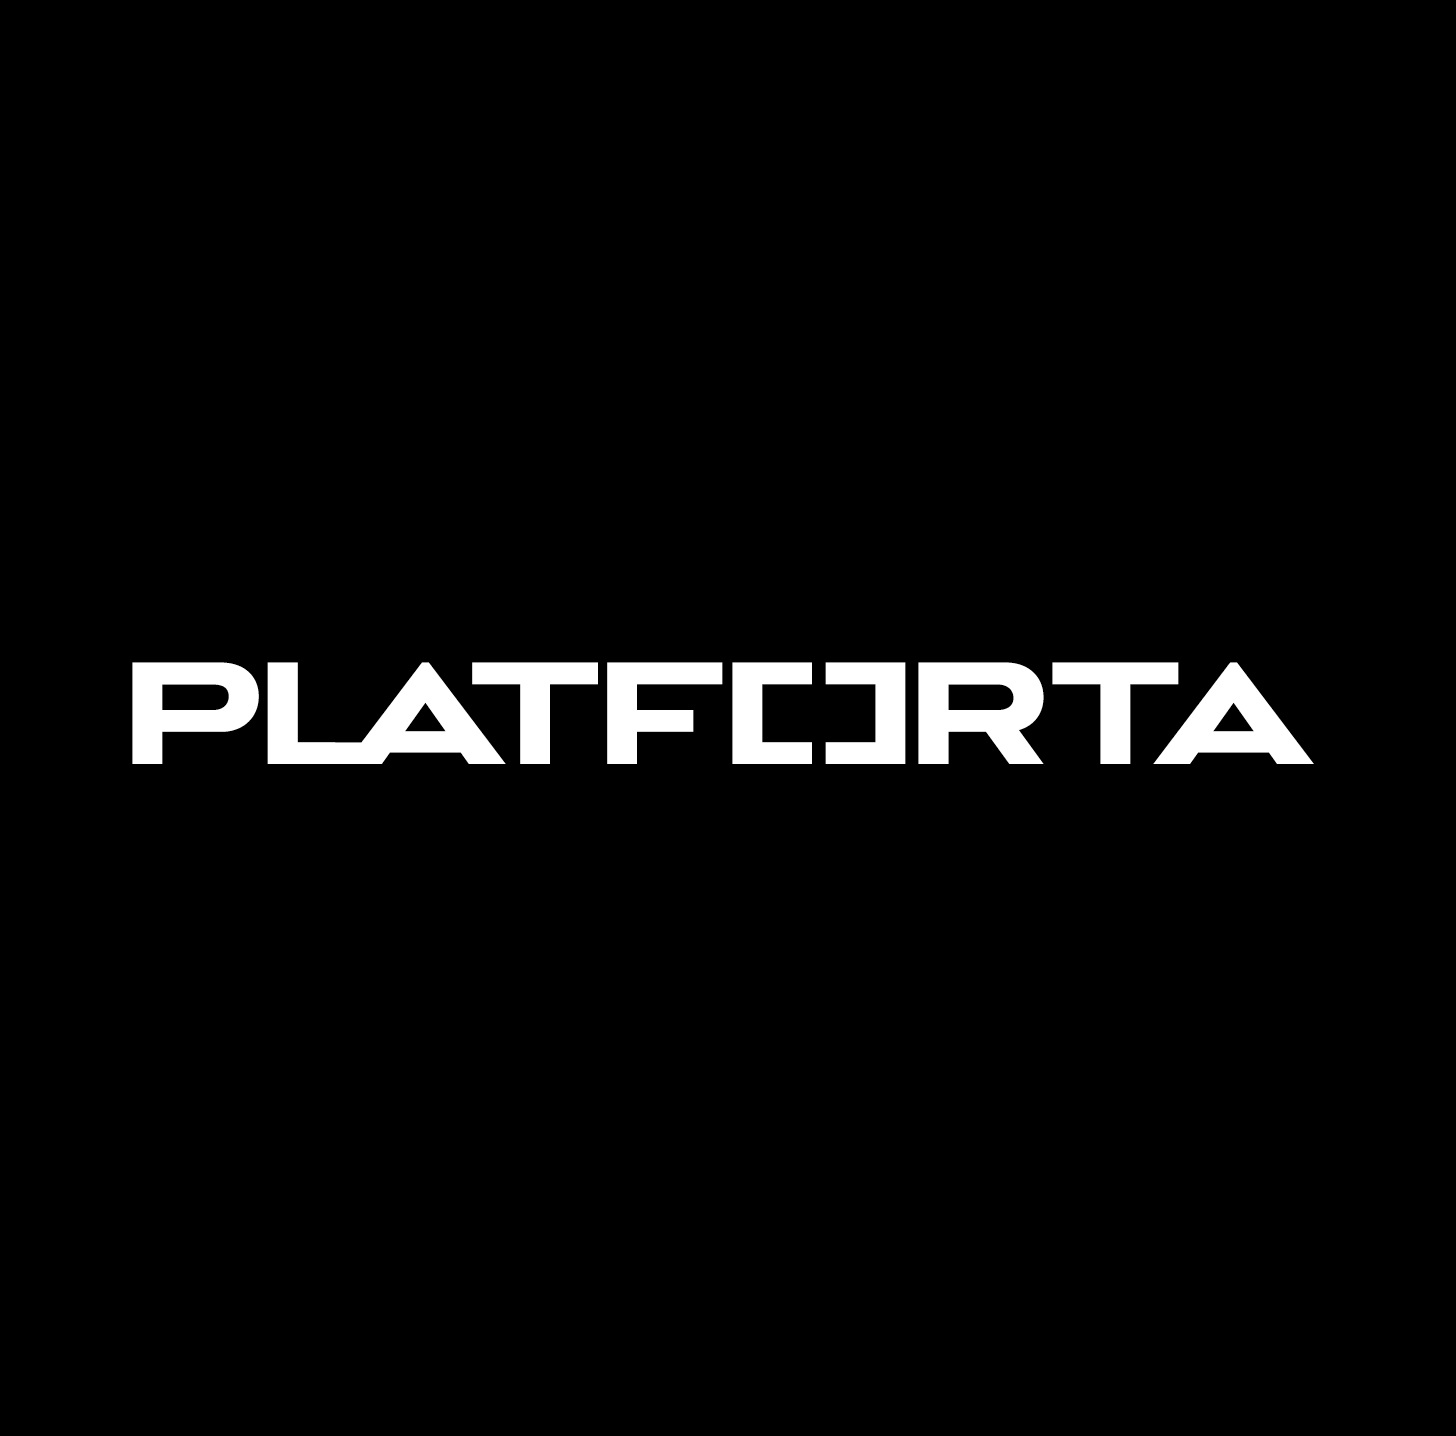 Логотип компании «Platforta»